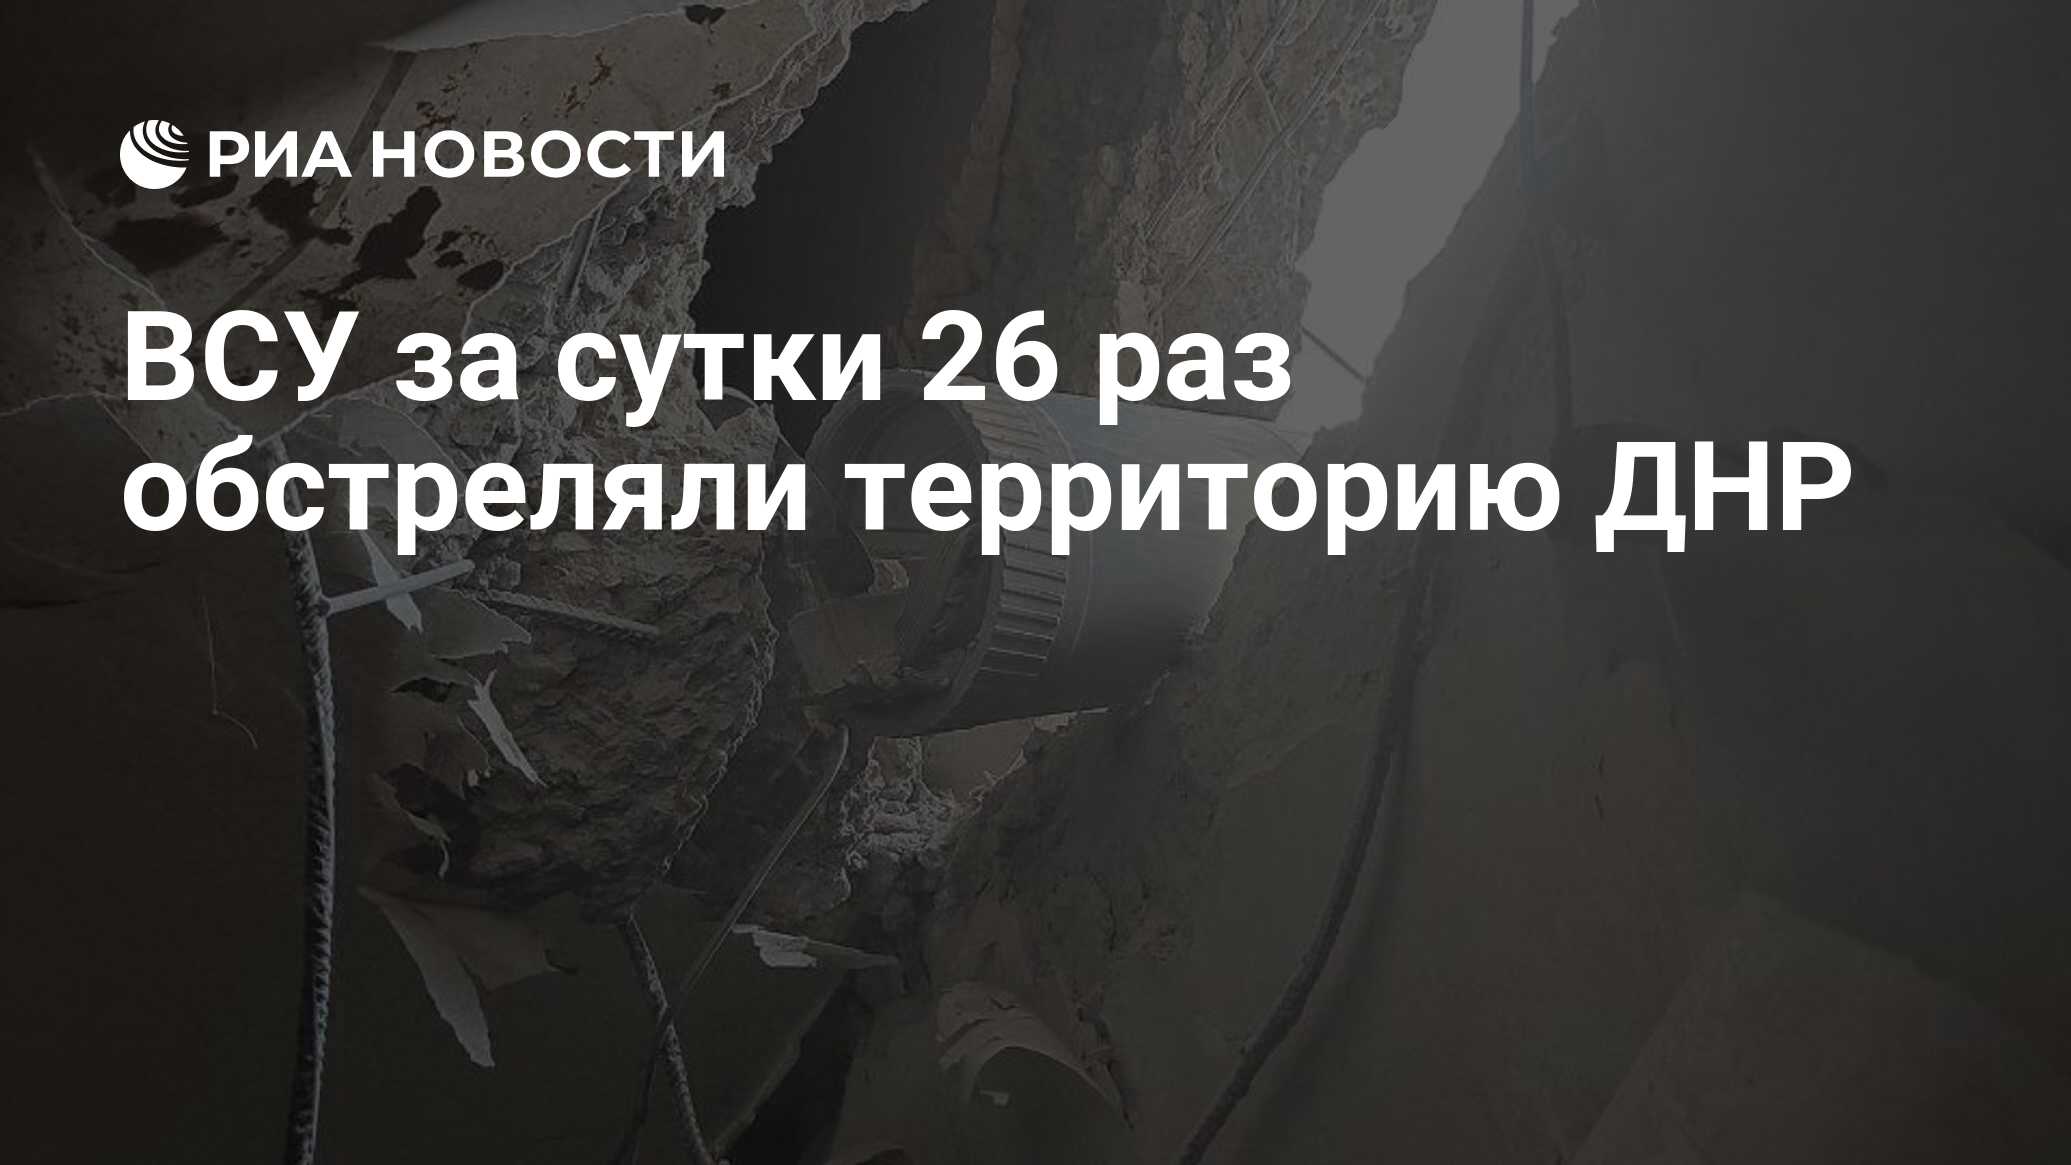 ВСУ за сутки обстреляли территорию ДНР 26 раз